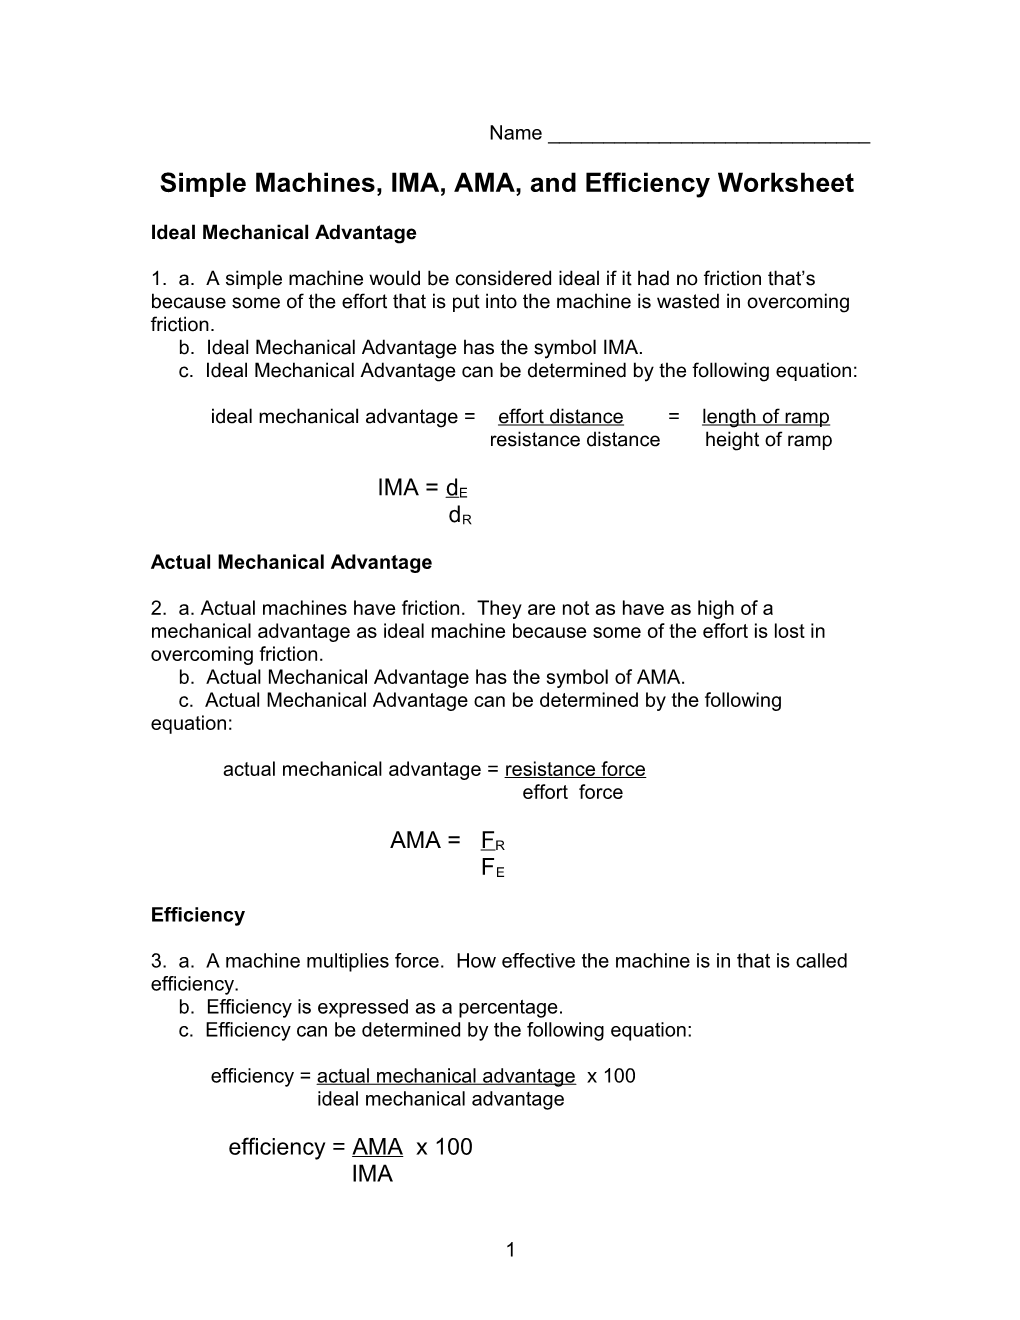 Simple Machines, IMA, AMA, and Efficiency Worksheet